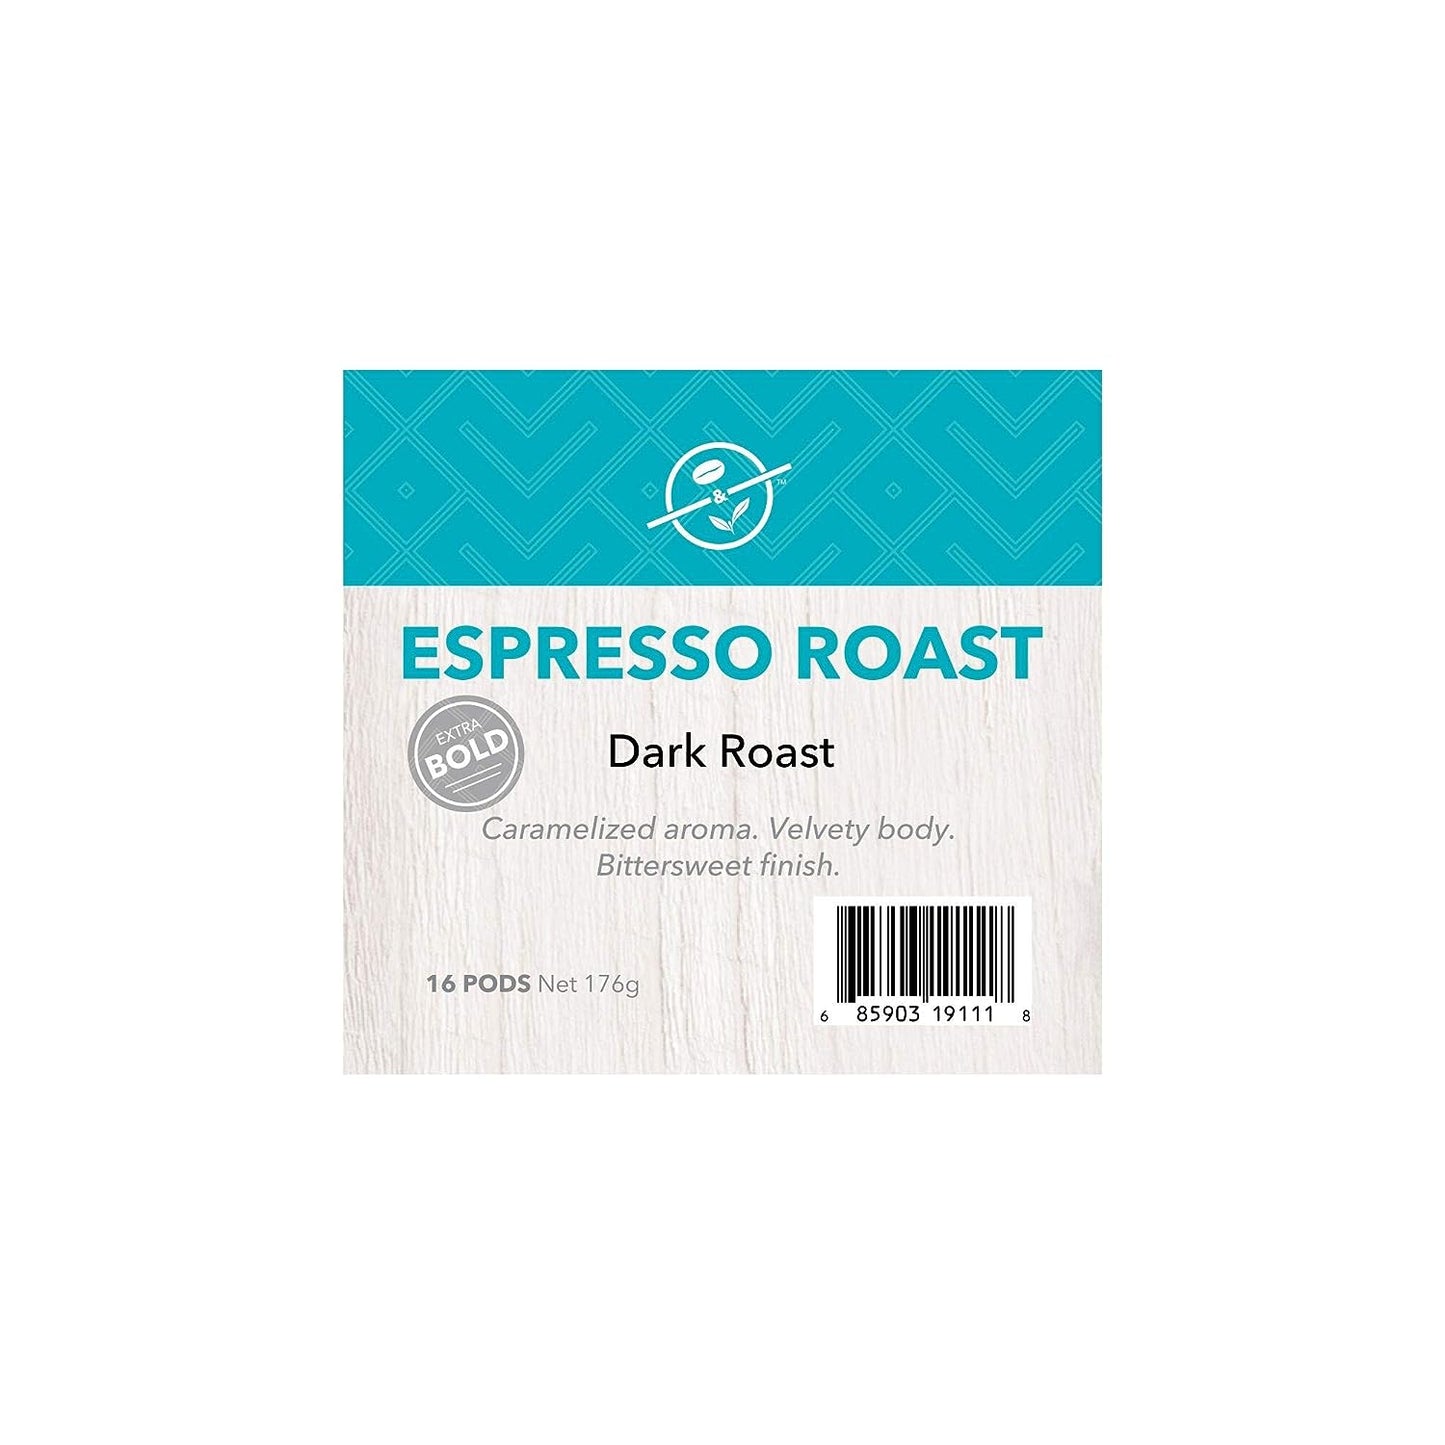 The Coffee Bean & Tea Leaf® Espresso Roast Coffee Soft Pods